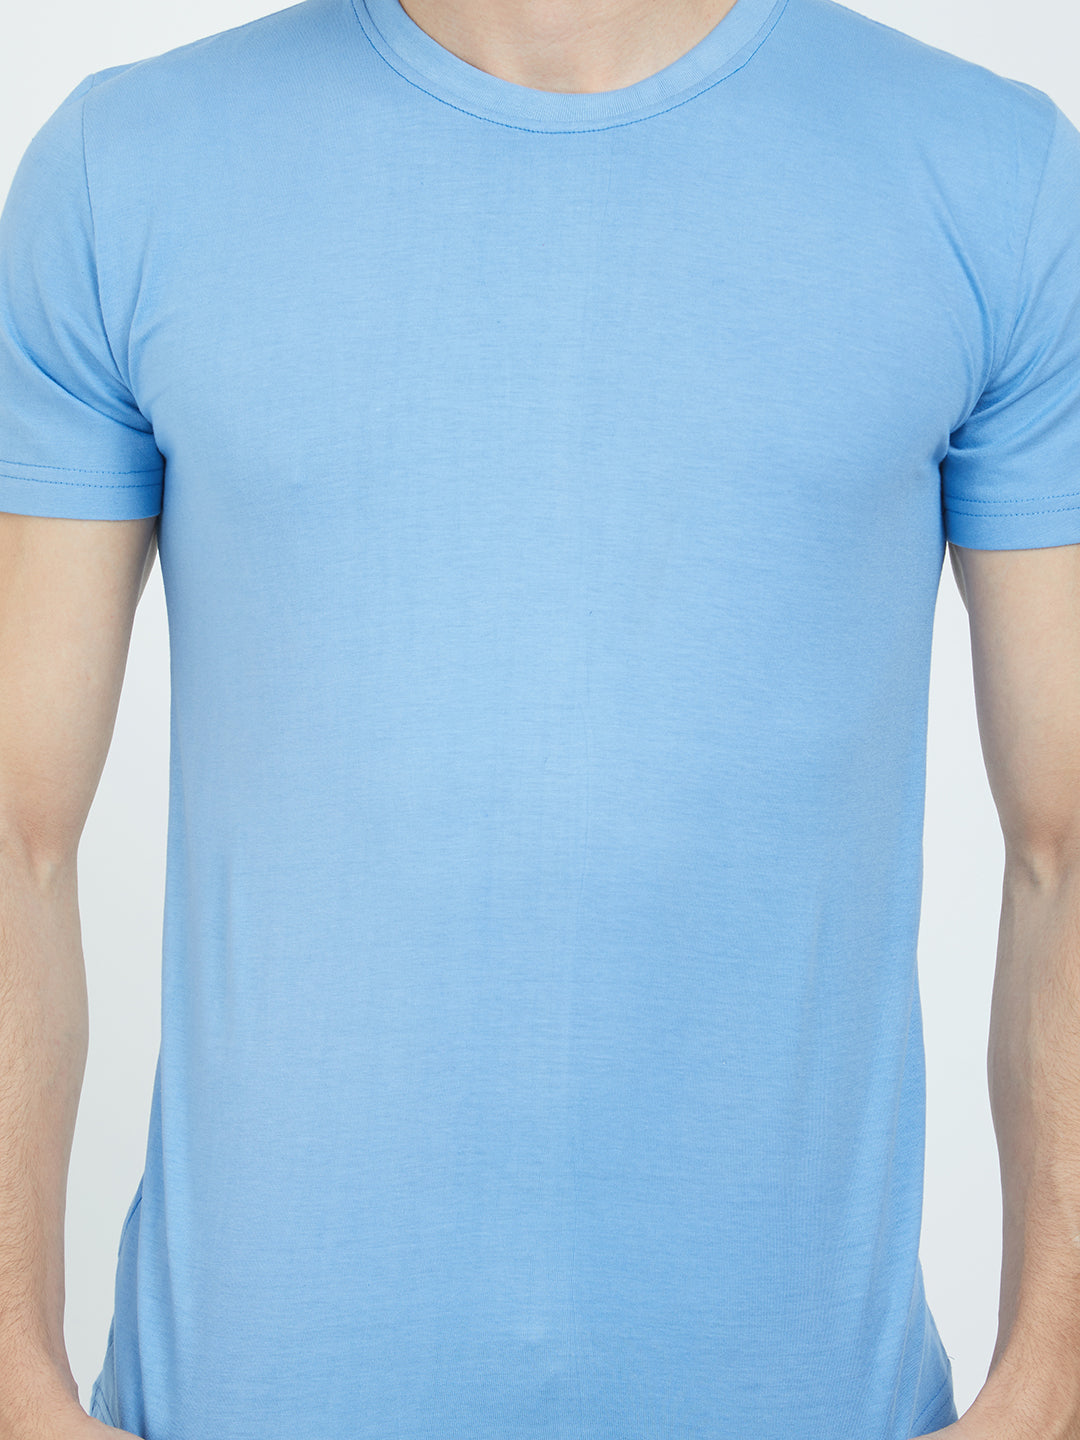 Basic Cyan Blue T-Shirt